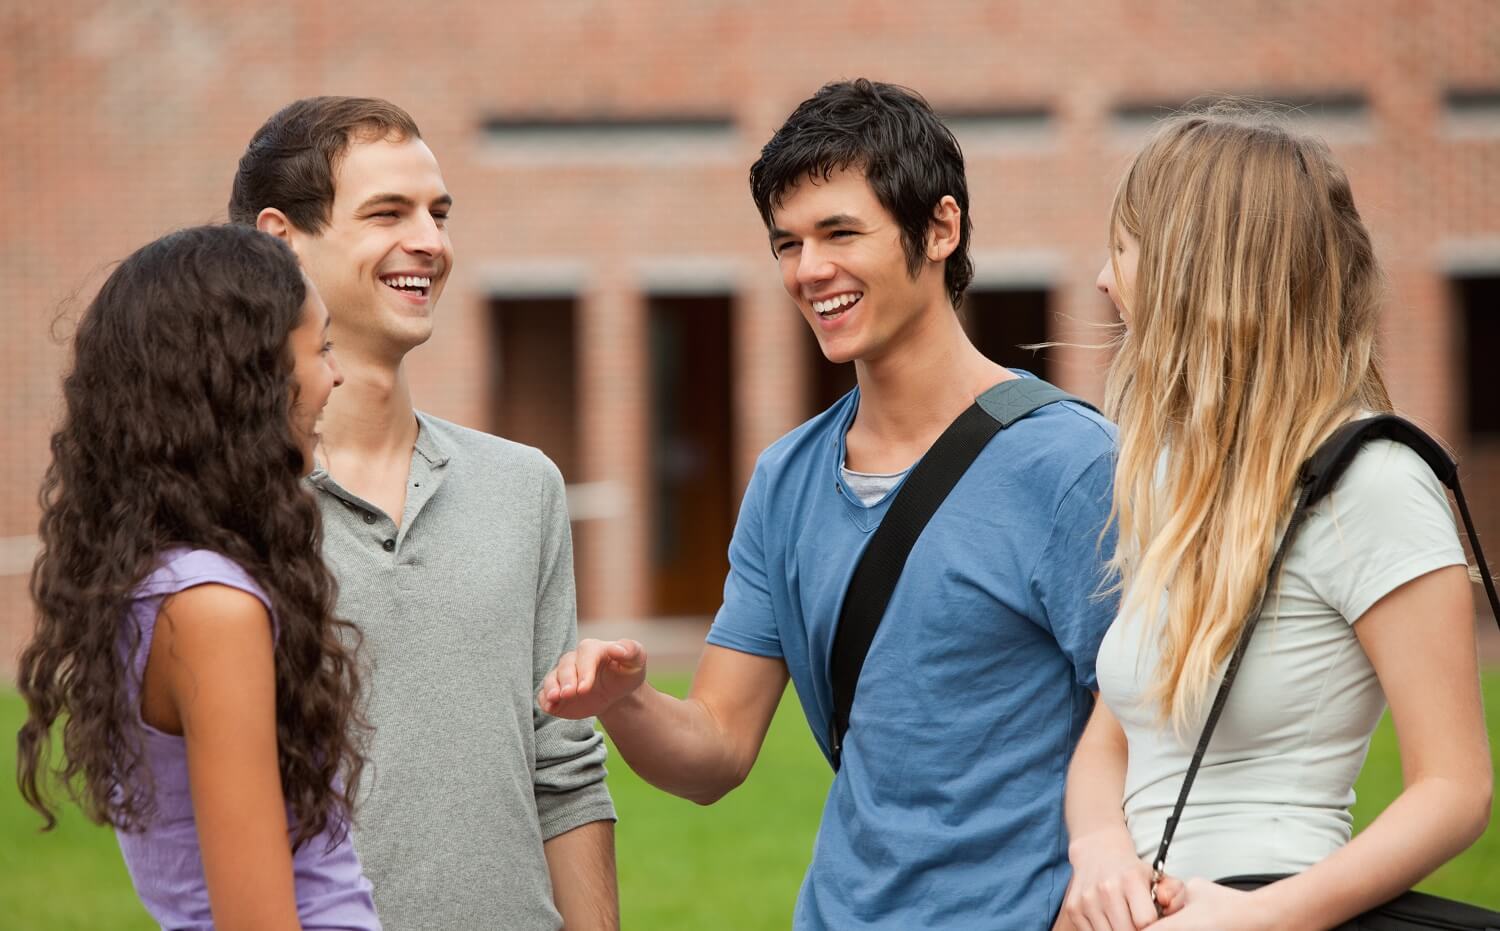 University students chatting